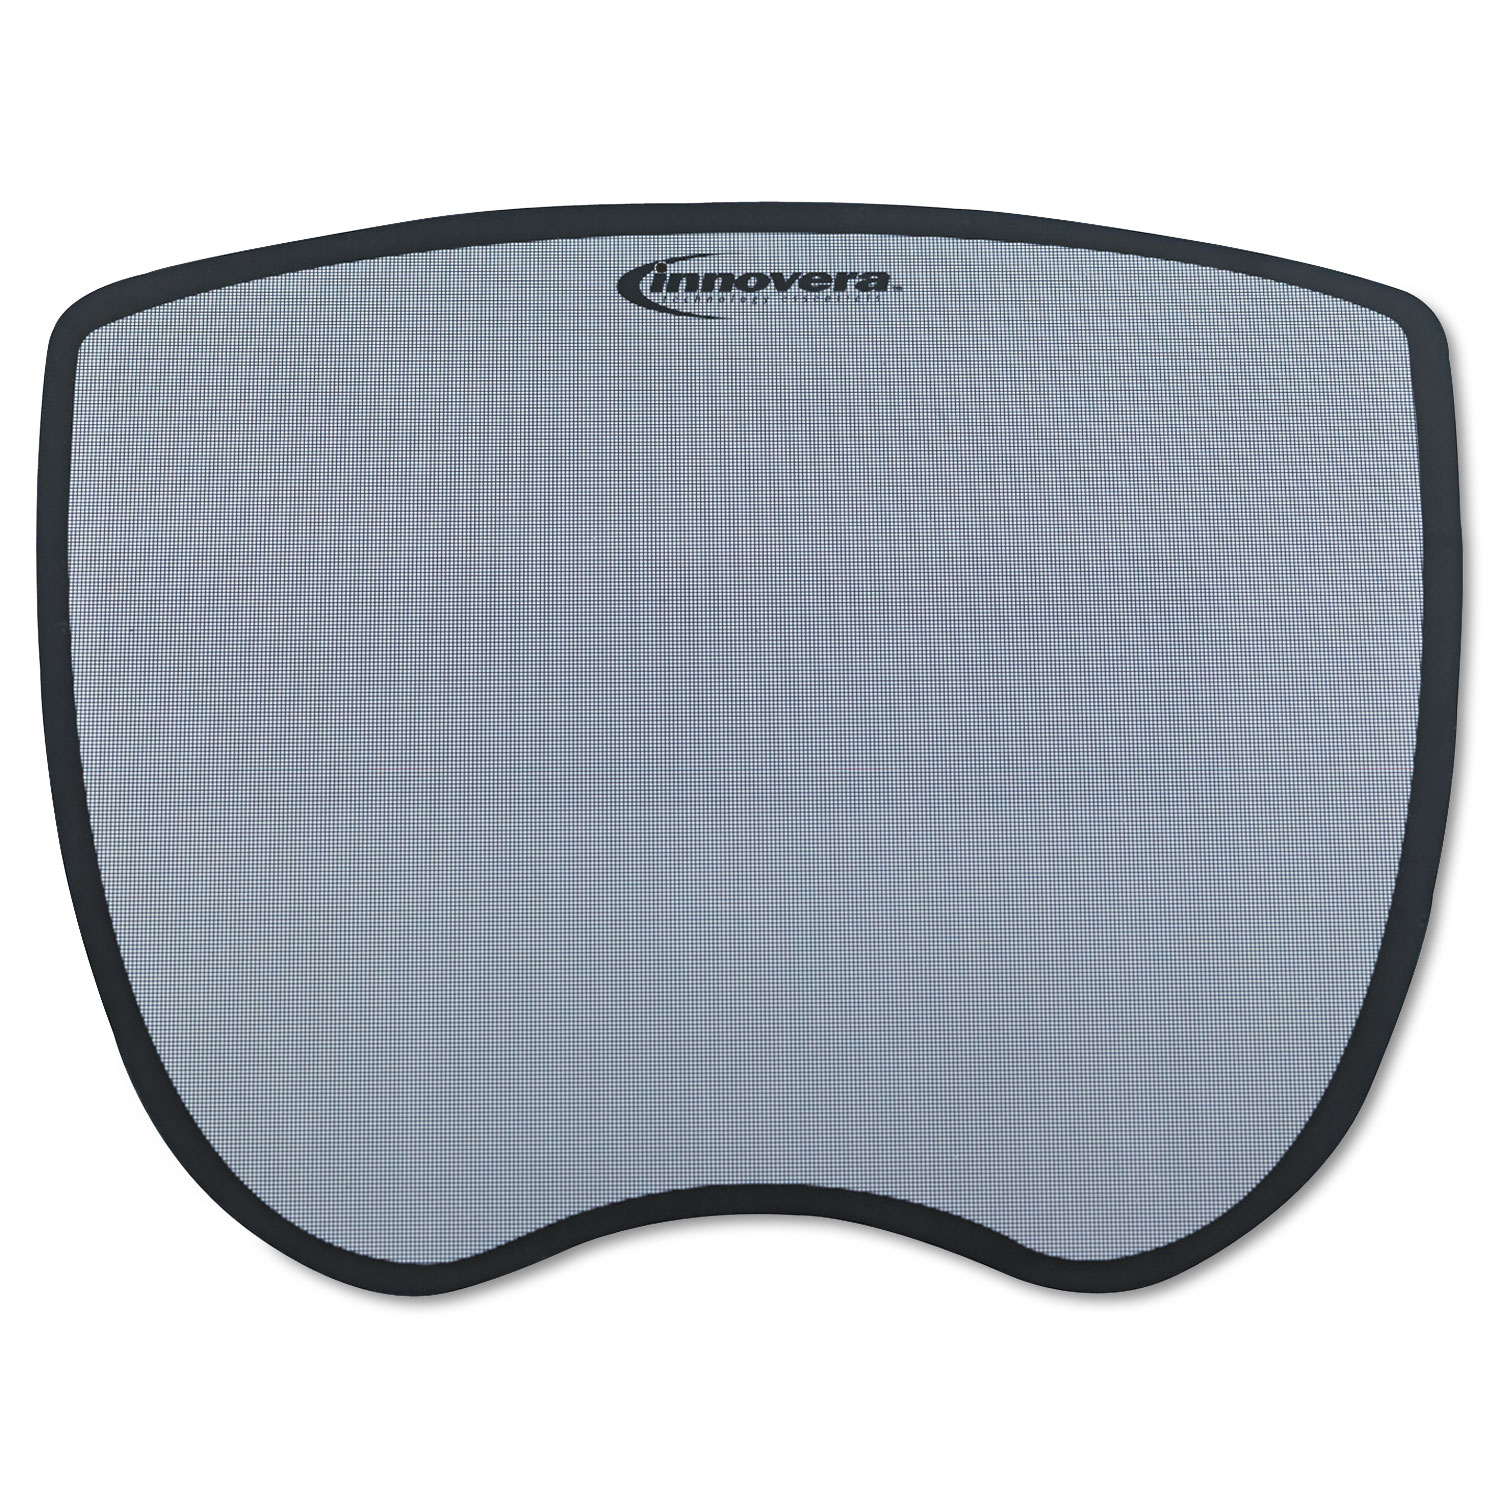  Innovera IVR50469 Ultra Slim Mouse Pad, Nonskid Rubber Base, 8-3/4 x 7, Gray (IVR50469) 